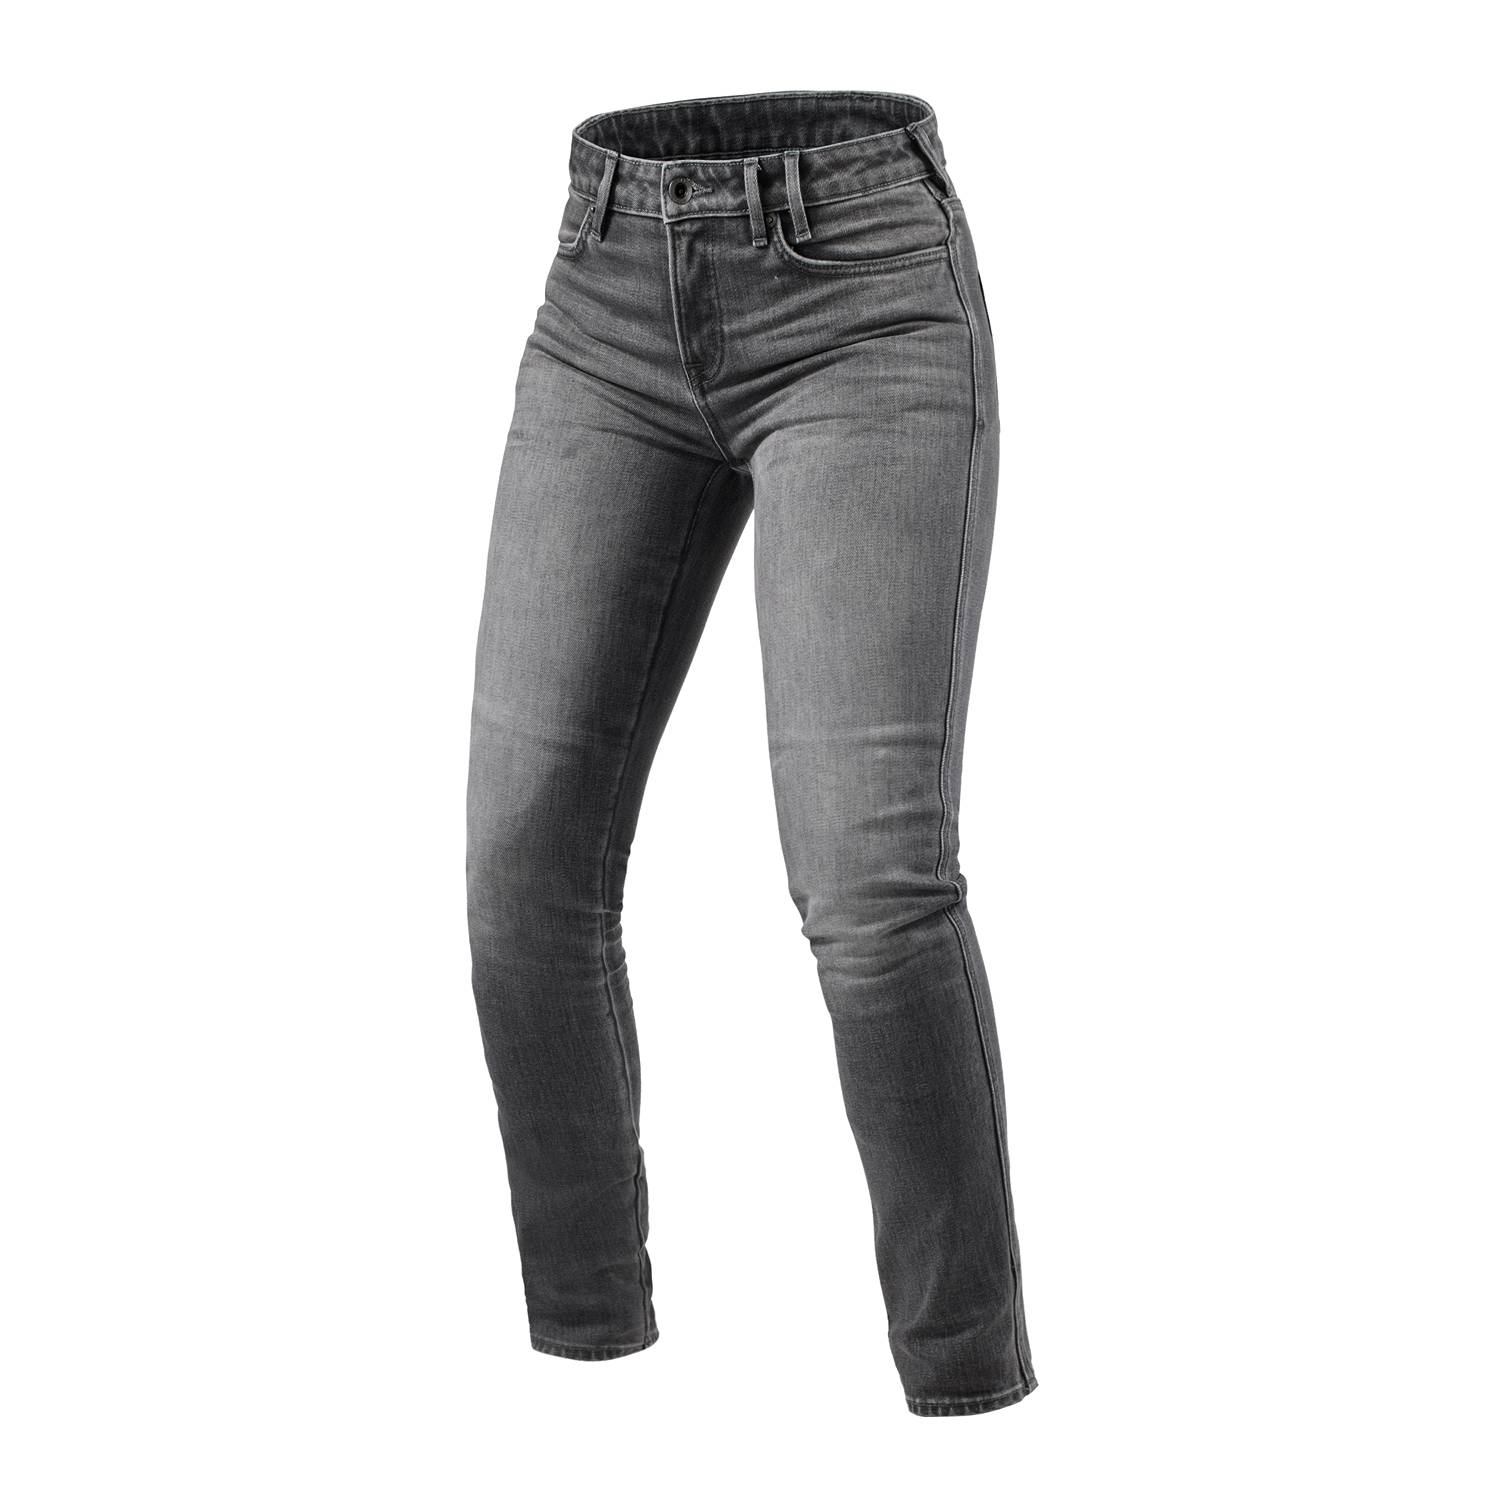 Image of REV'IT! Jeans Shelby 2 Ladies SK Medium Grey Stone L30 Size L30/W30 ID 8700001376730